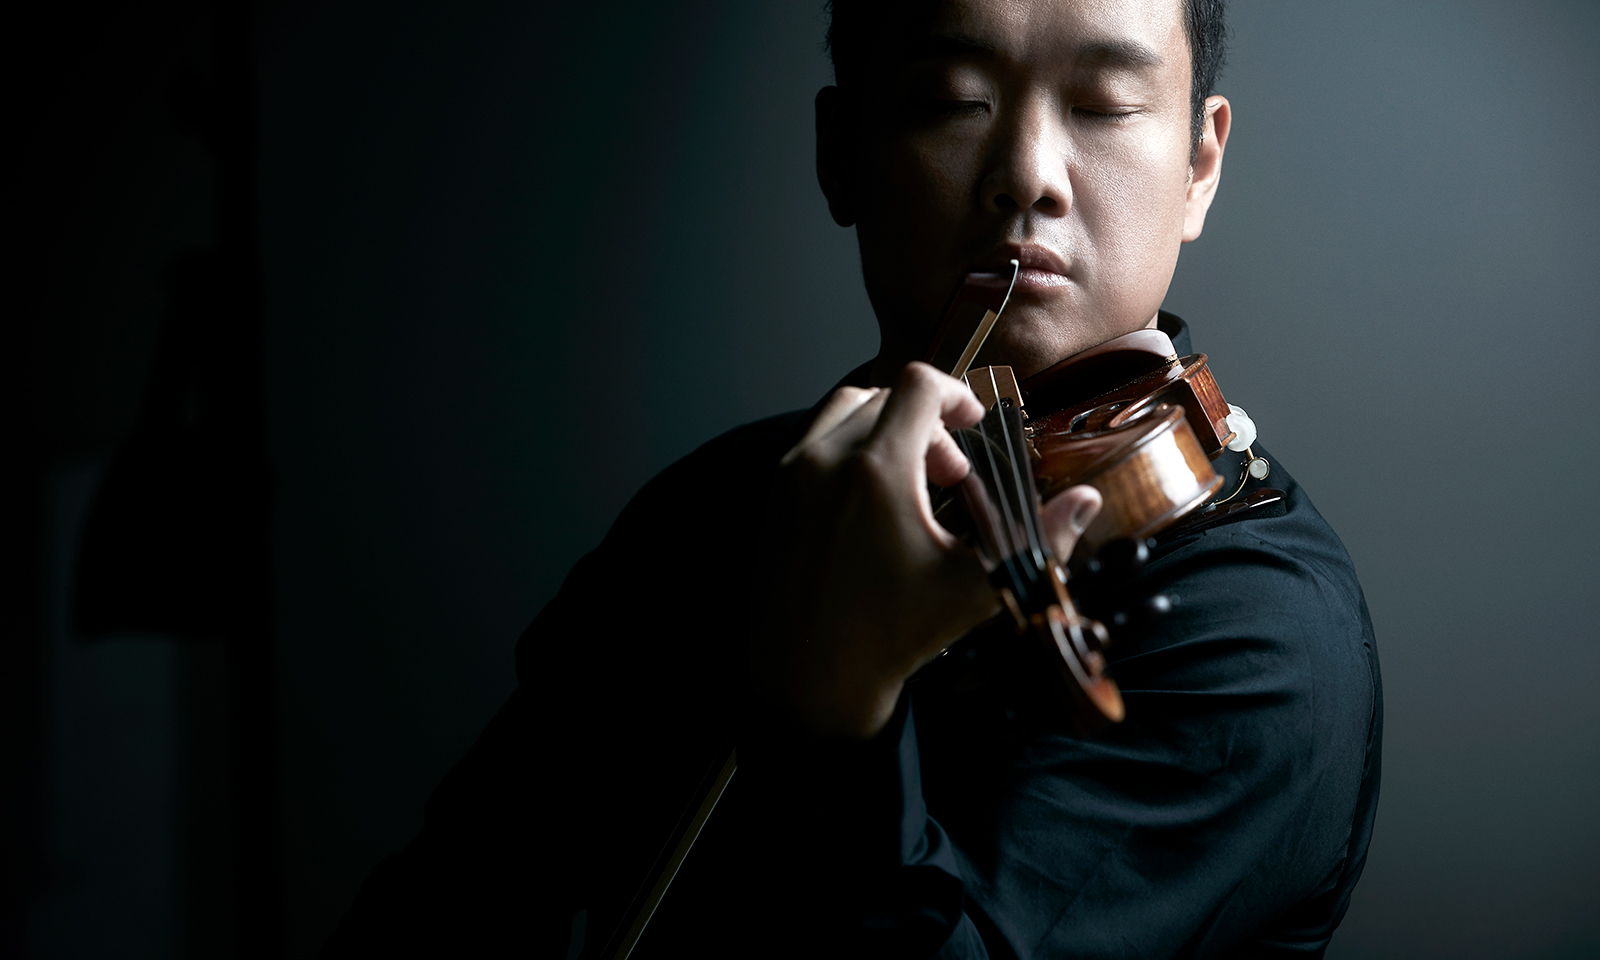 Concertmaster Dennis Kim